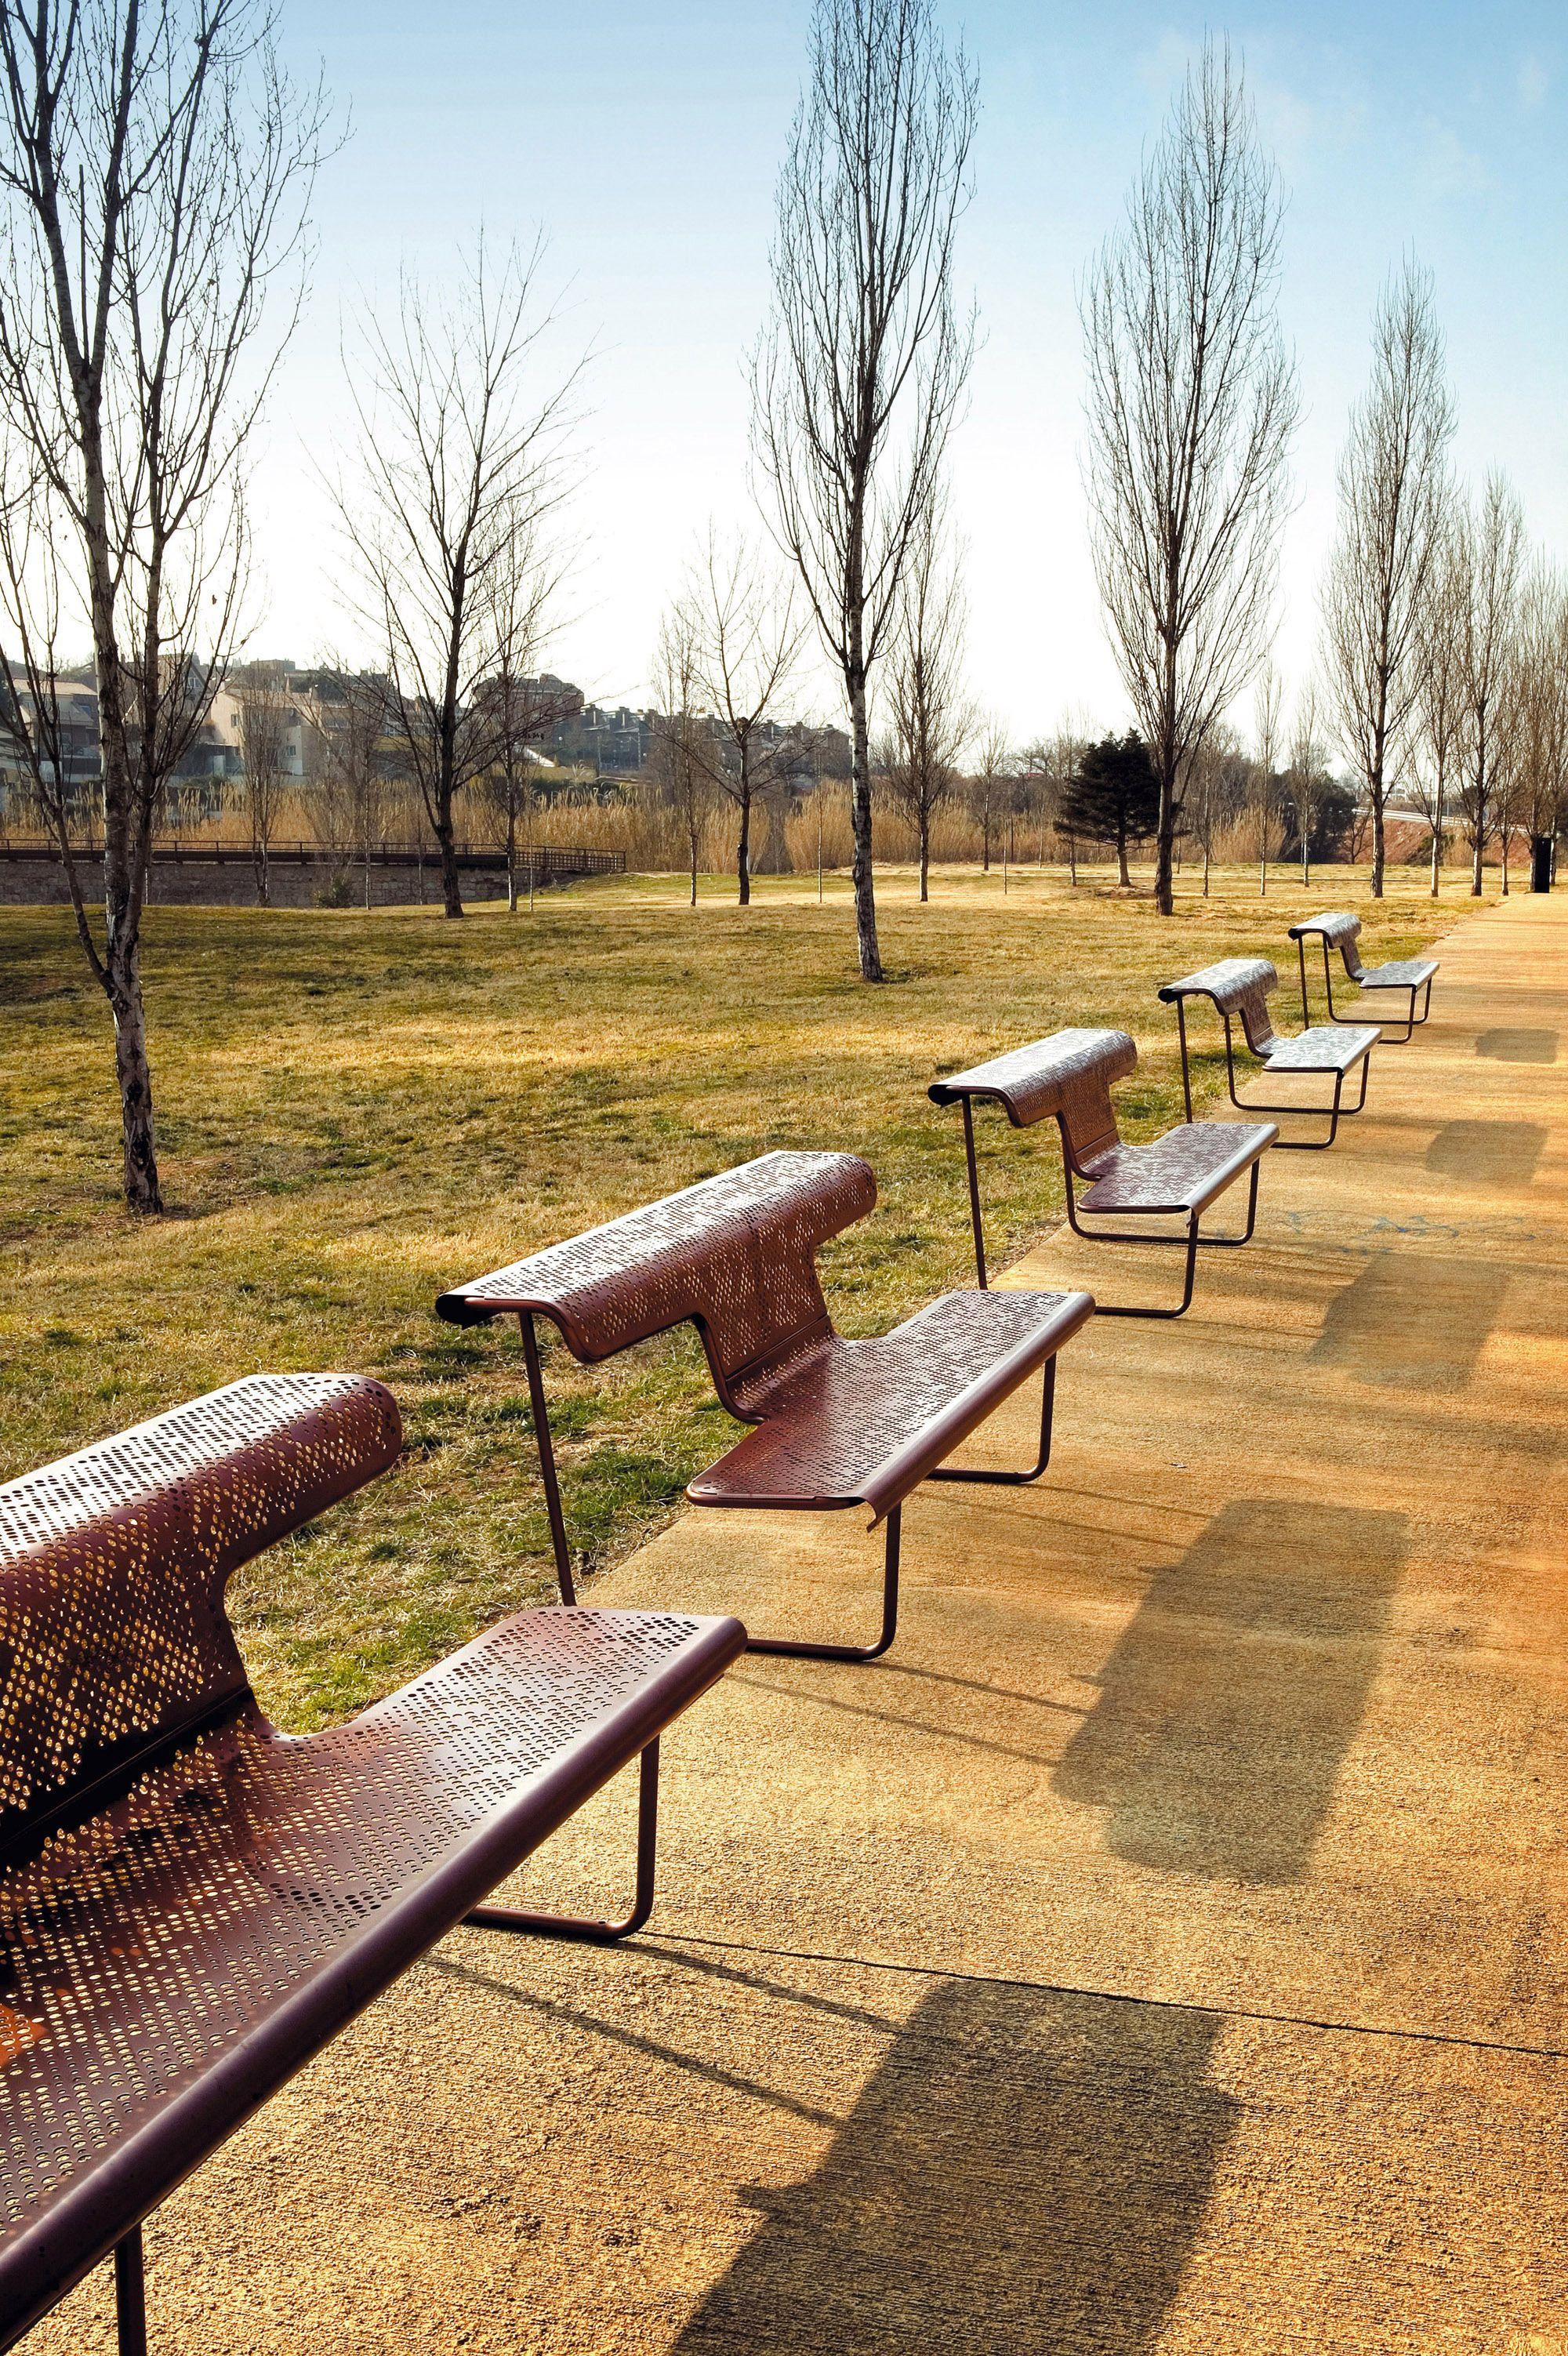 Steel Public bench in perforated steel designed by Alfredo Häberli model 